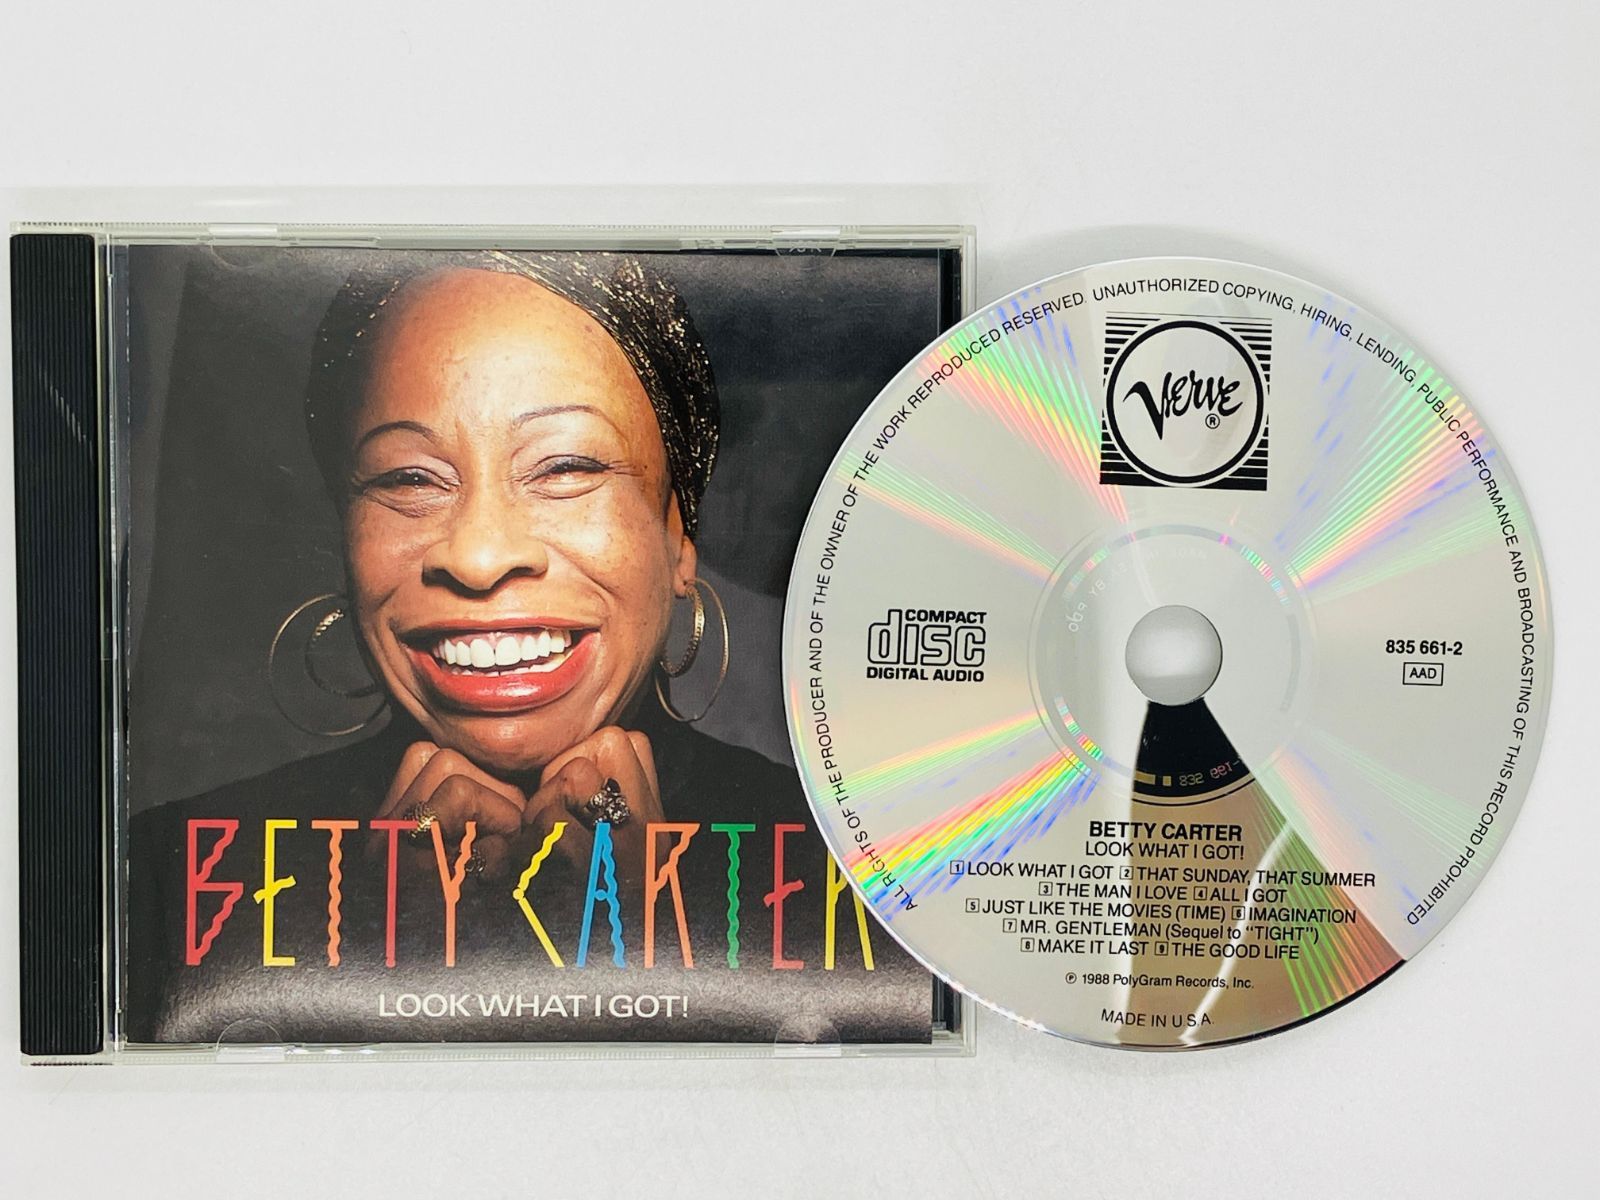 CD BETTY CARTER / LOOK WHAT I GOT / ベティカーター / VERVE 835 661-2 蒸着仕様 H04